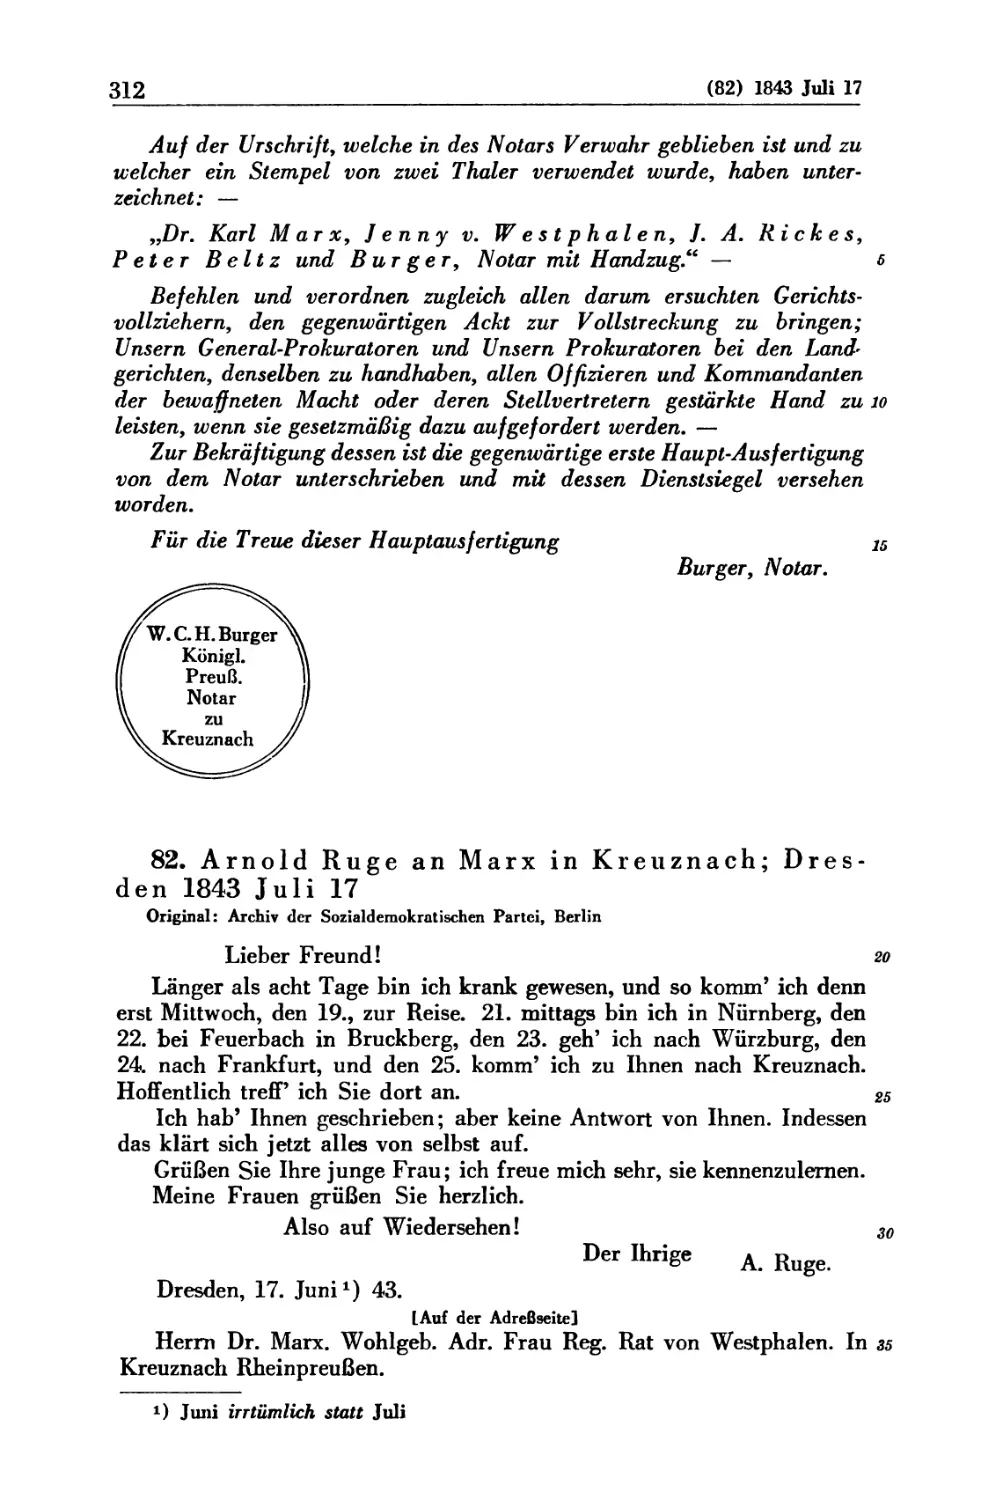 82. Arnold Ruge an Marx in Kreuznach; Dresden 1843 Juli 17